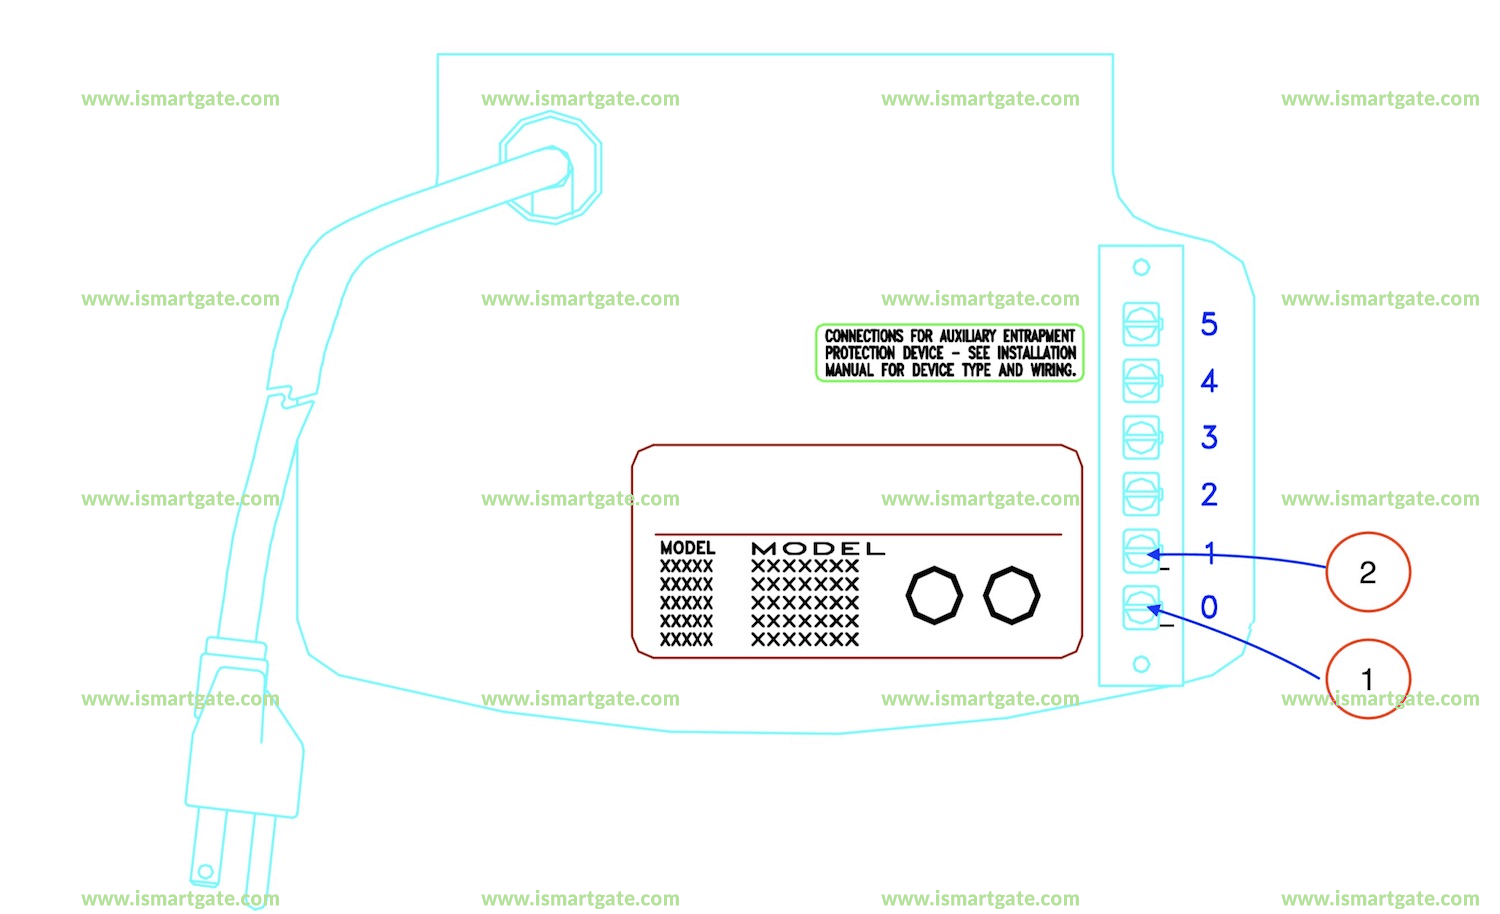 Wiring diagram for ALLSTAR 6500